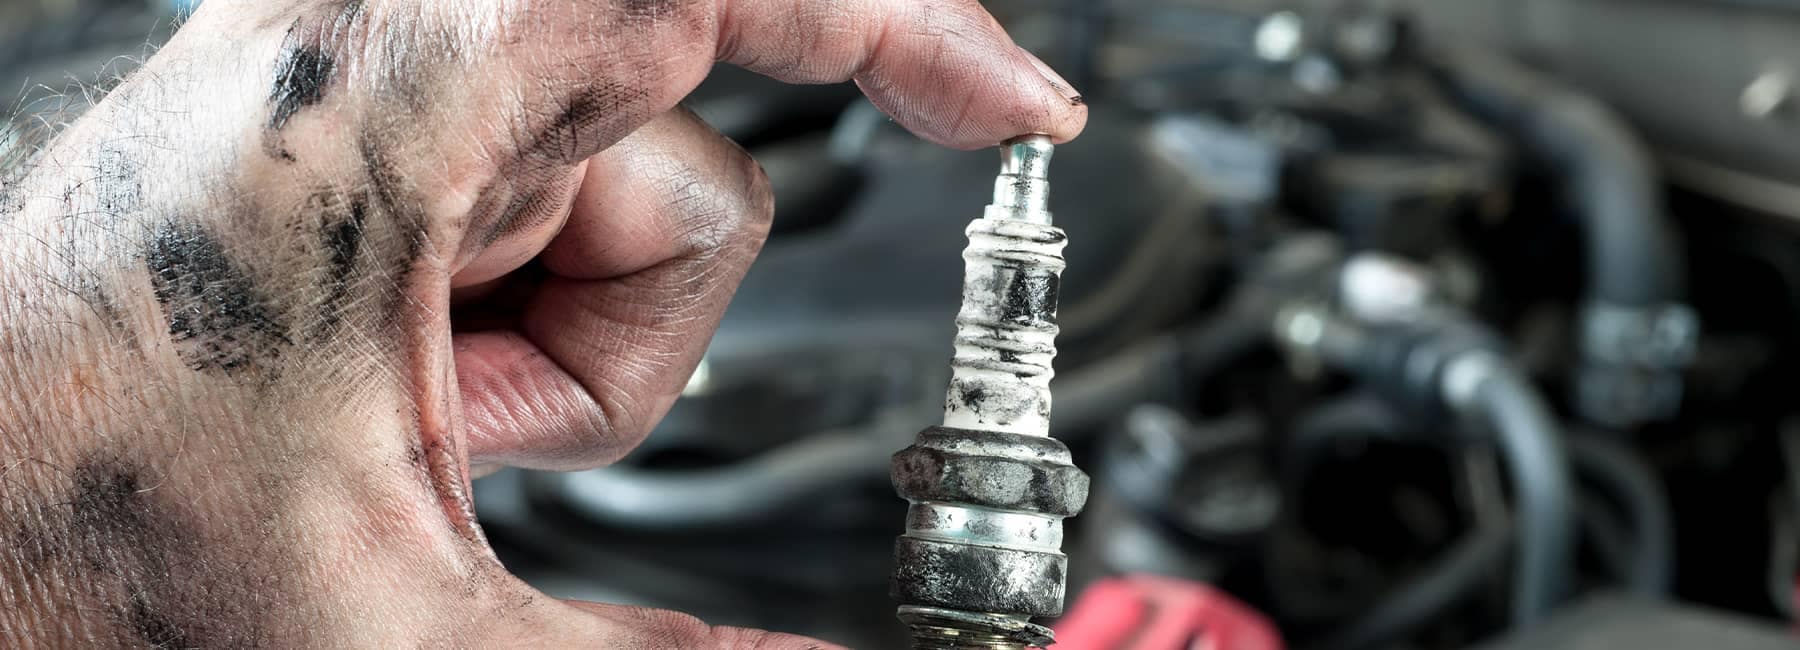 Mechanic holding a spark plug